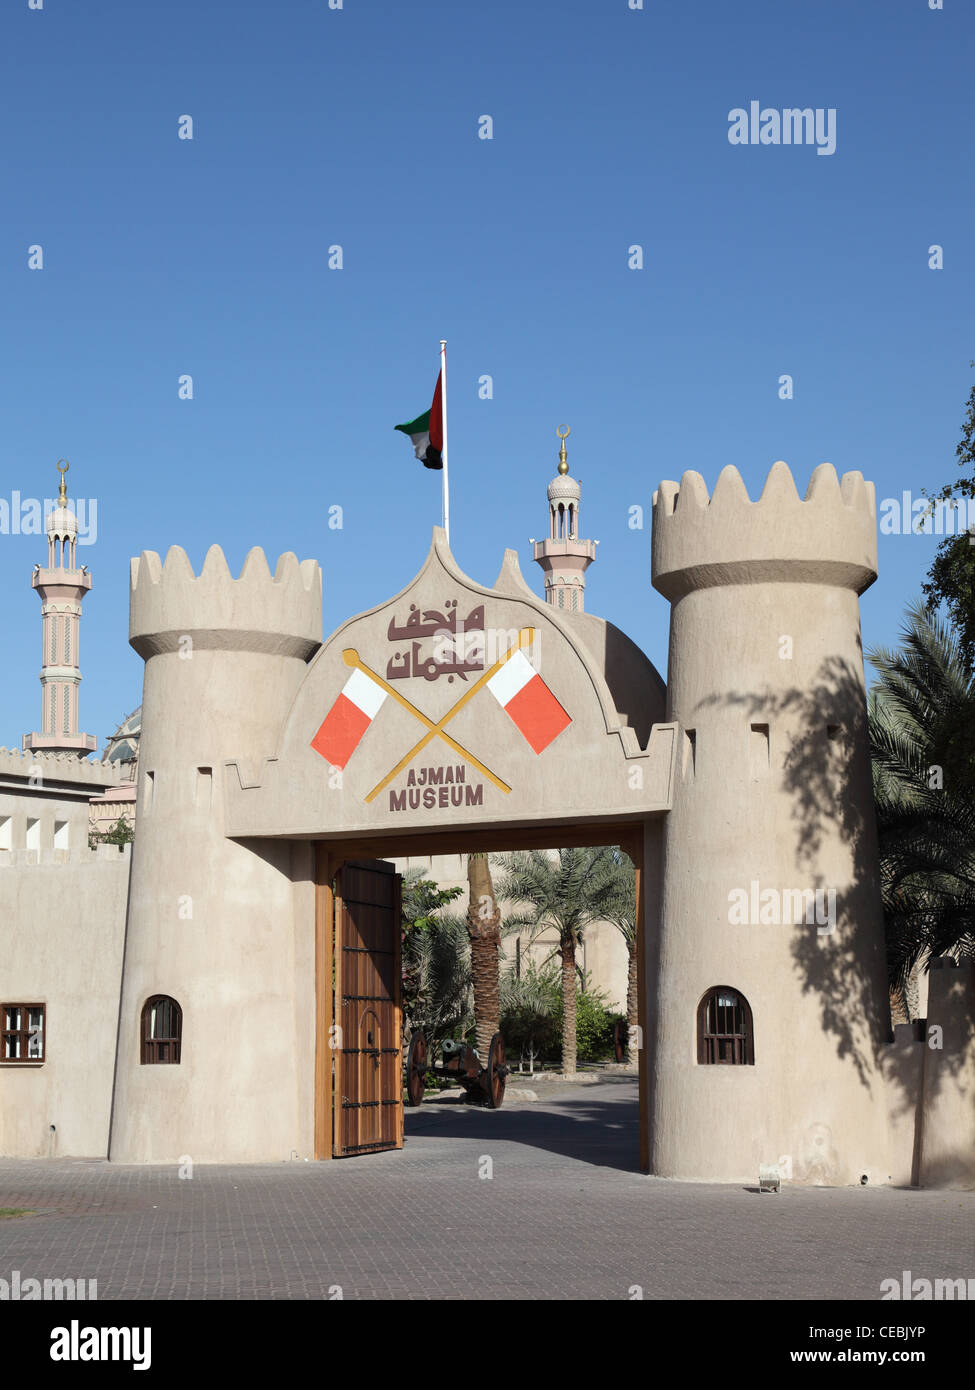 The museum of Ajman, United Arab Emirates Stock Photo